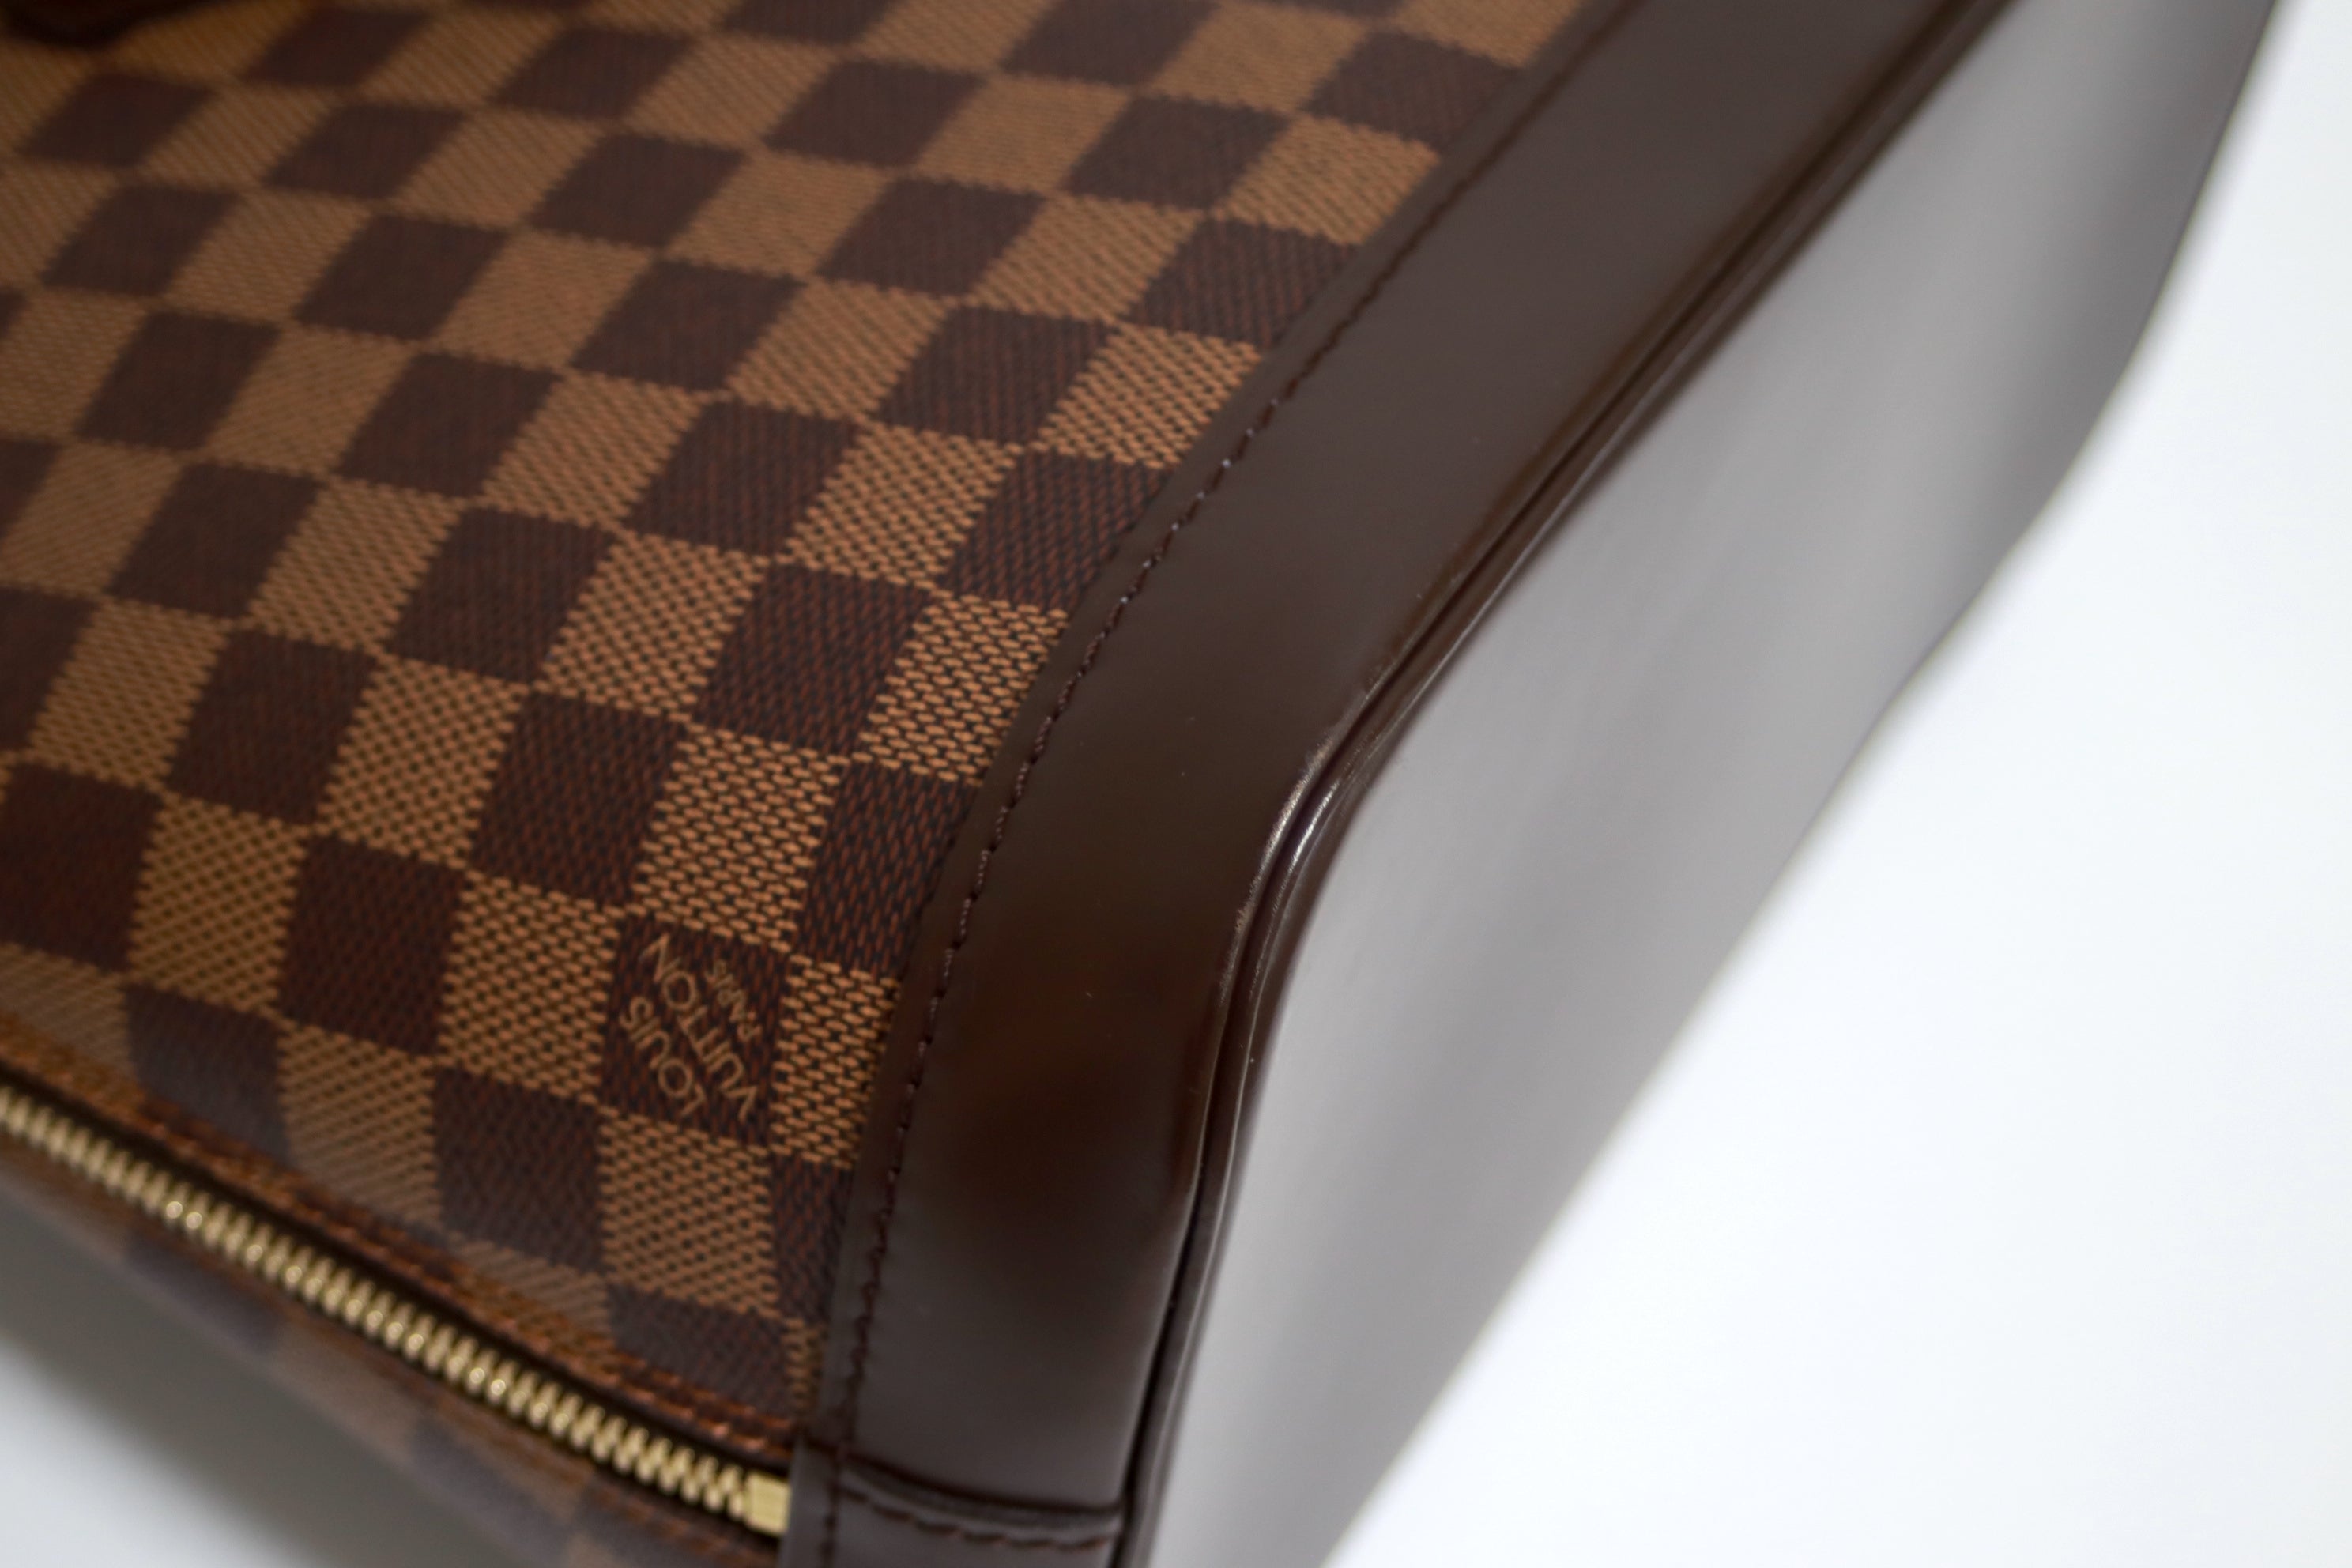 Louis Vuitton Alma Pm Damier Ebene Handbag (7671)